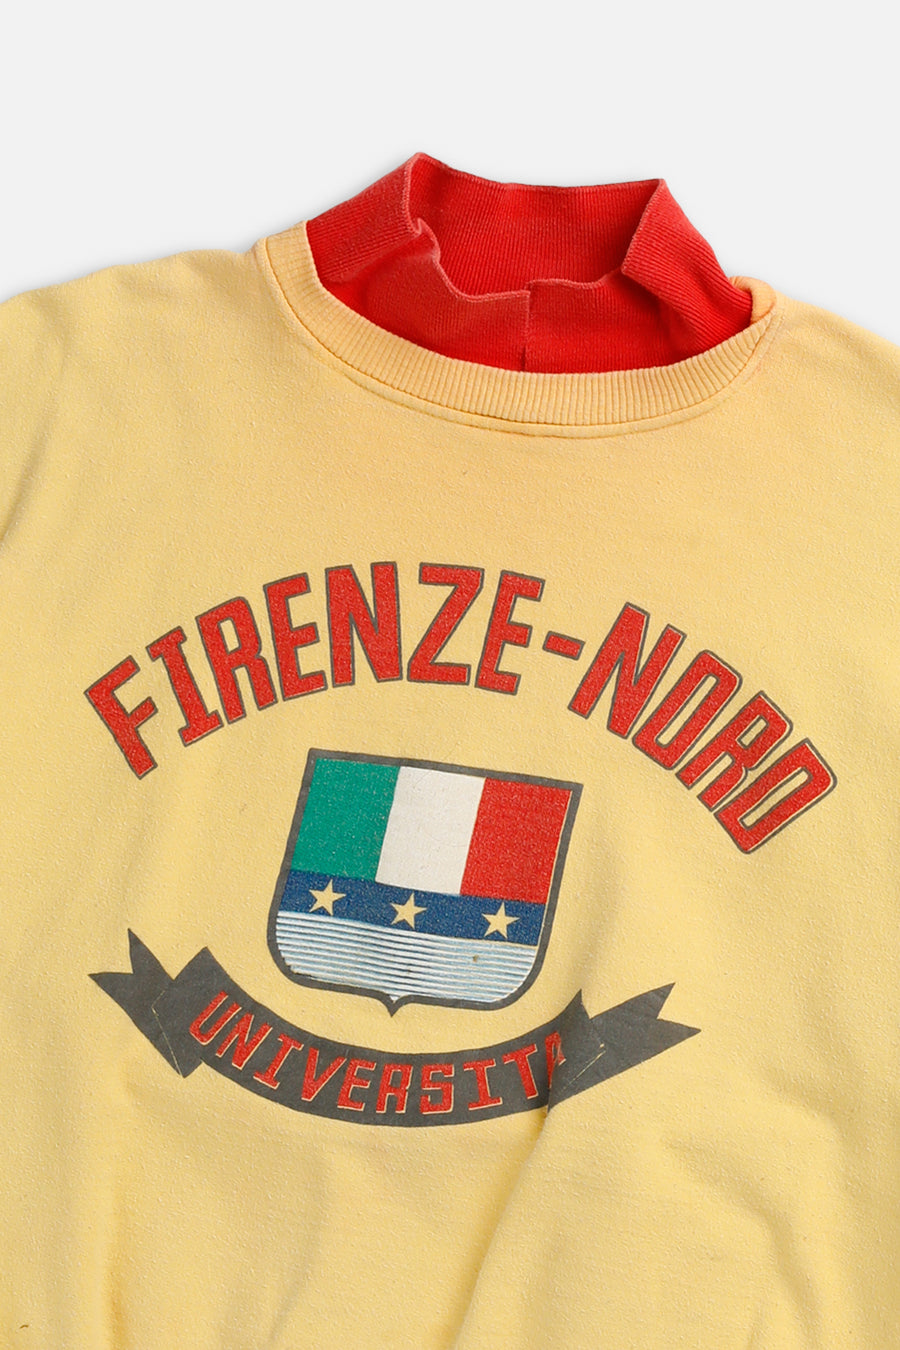 Vintage Firenze-Noro University Sweatshirt - S